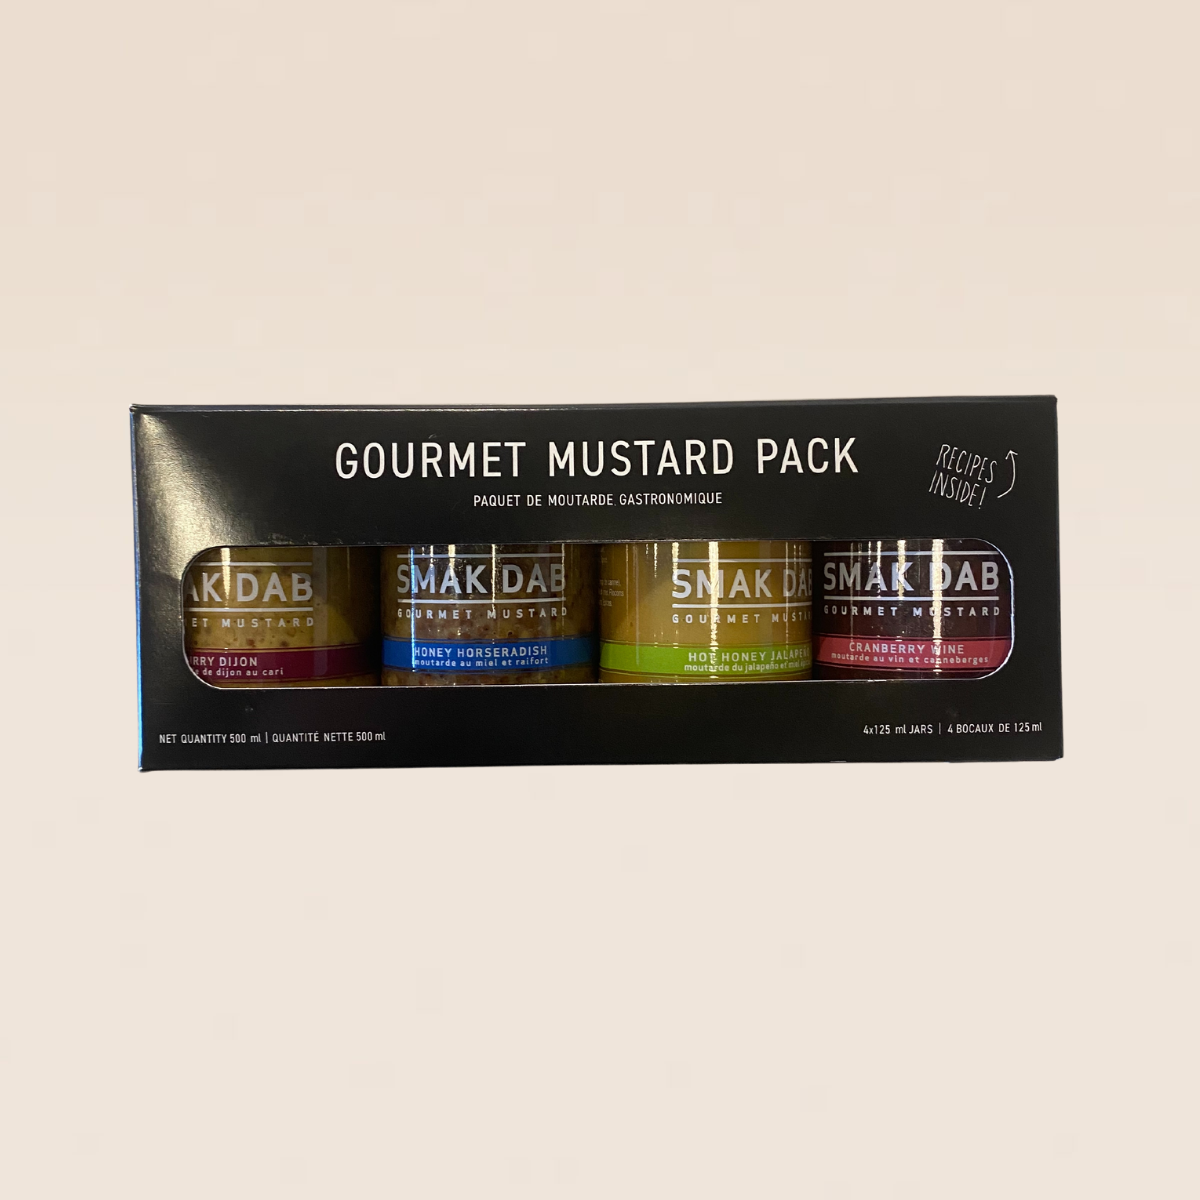 Smak Dab Mustard Flavour Packs